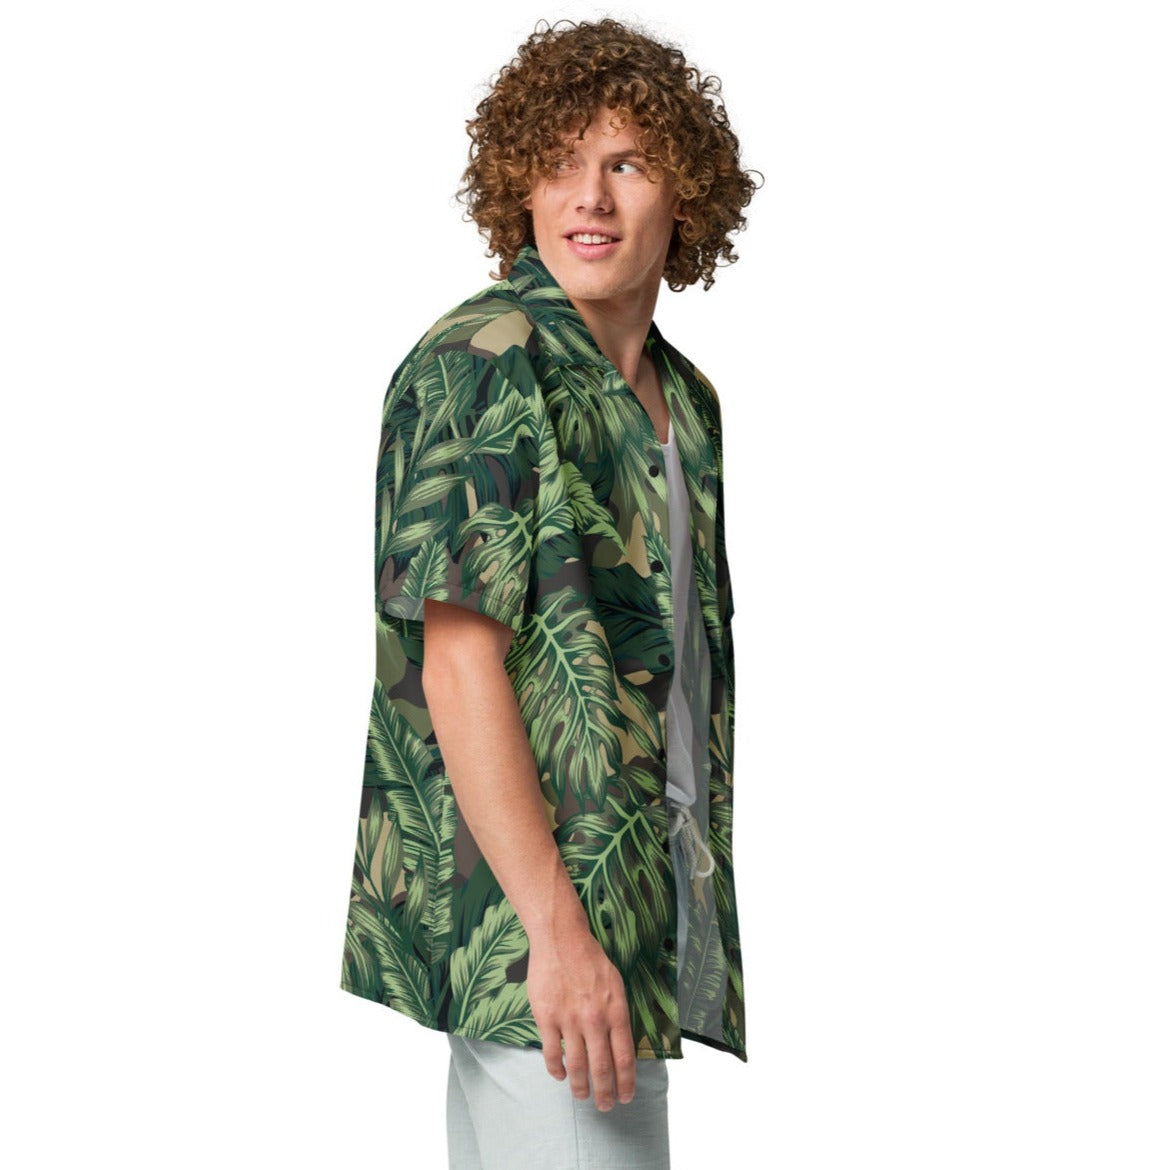 Tropicamo Tacticombo Hawaiian Shirt